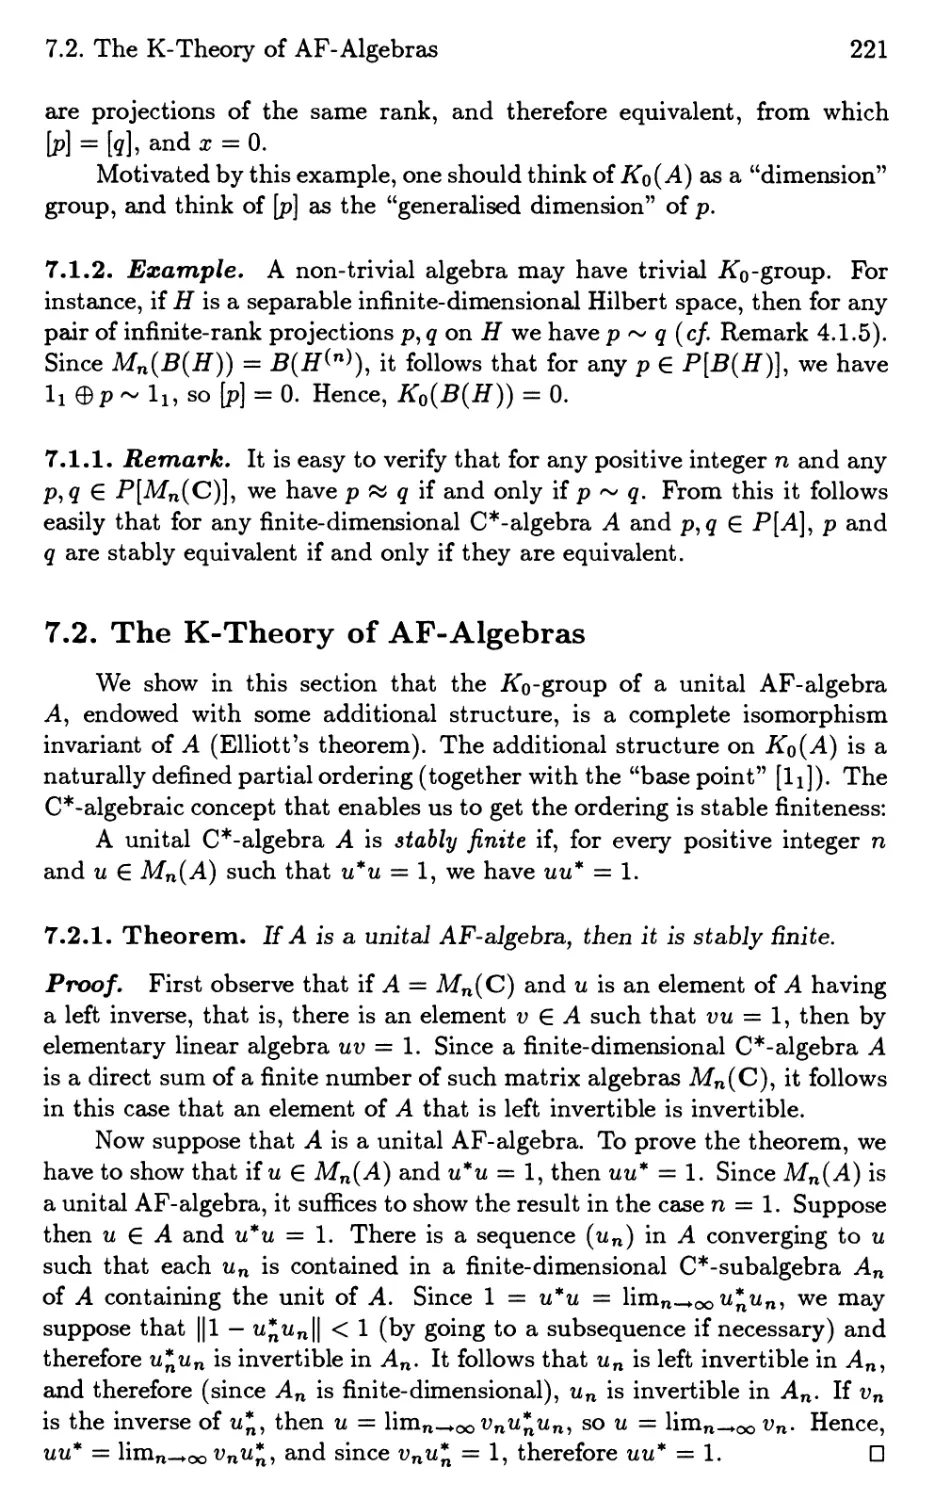 7.2. The K-Theory of AF-Algebras